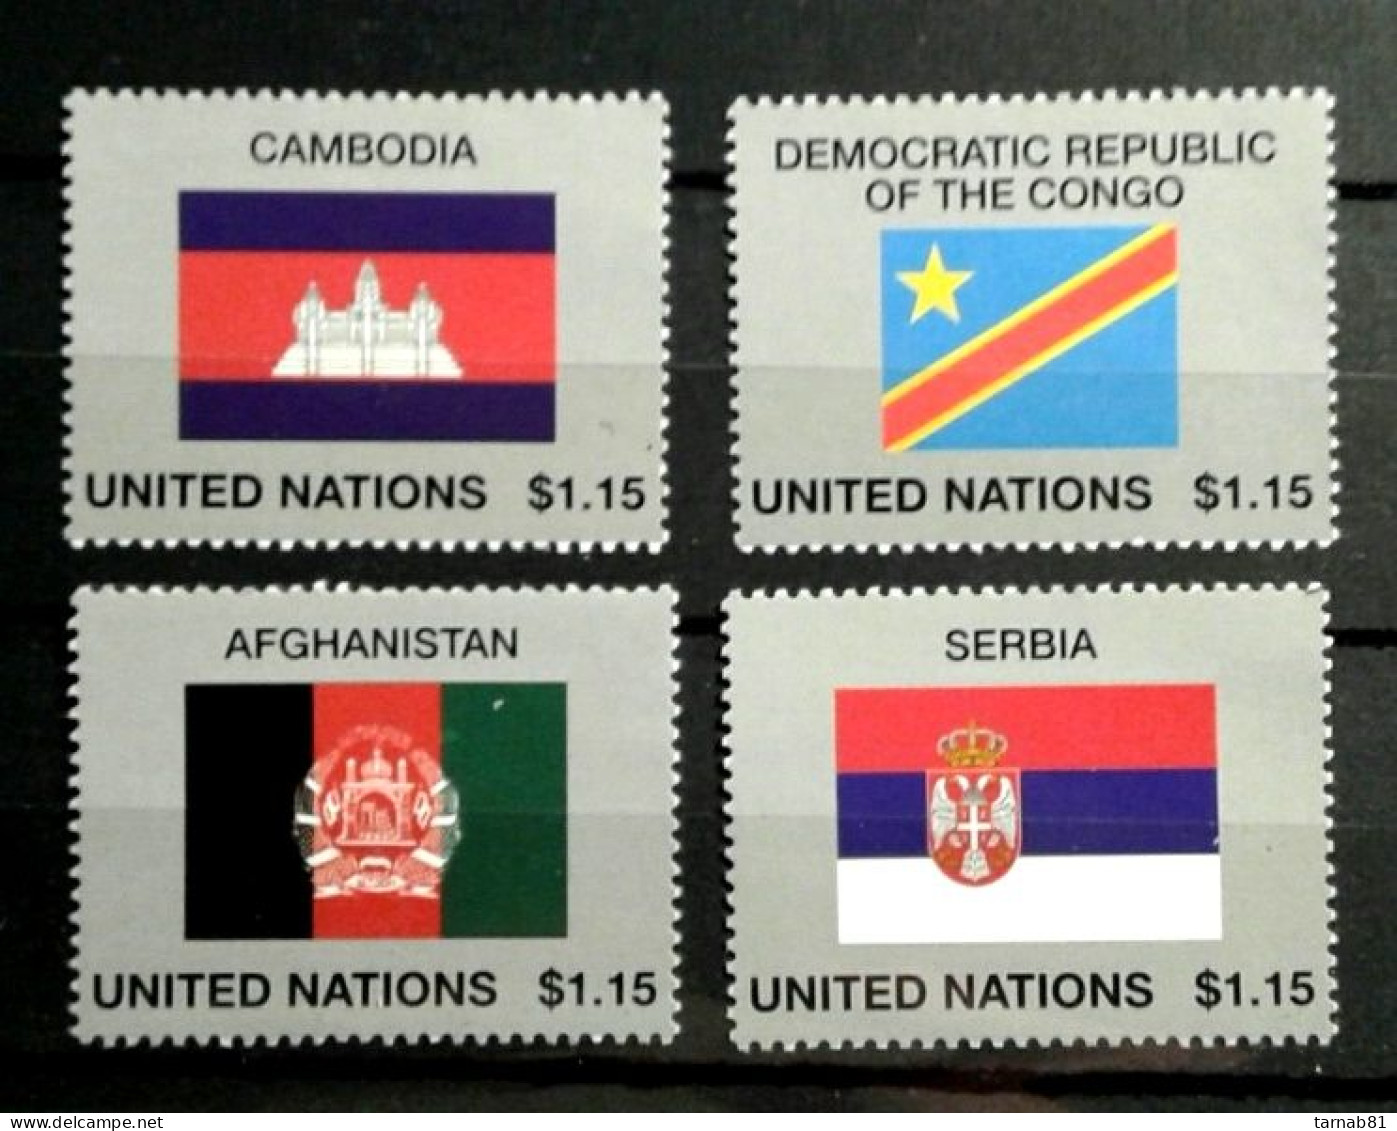 ONU   2014 Nations Unies Drapeaux Flags Flaggen   2014 ONU - Unused Stamps